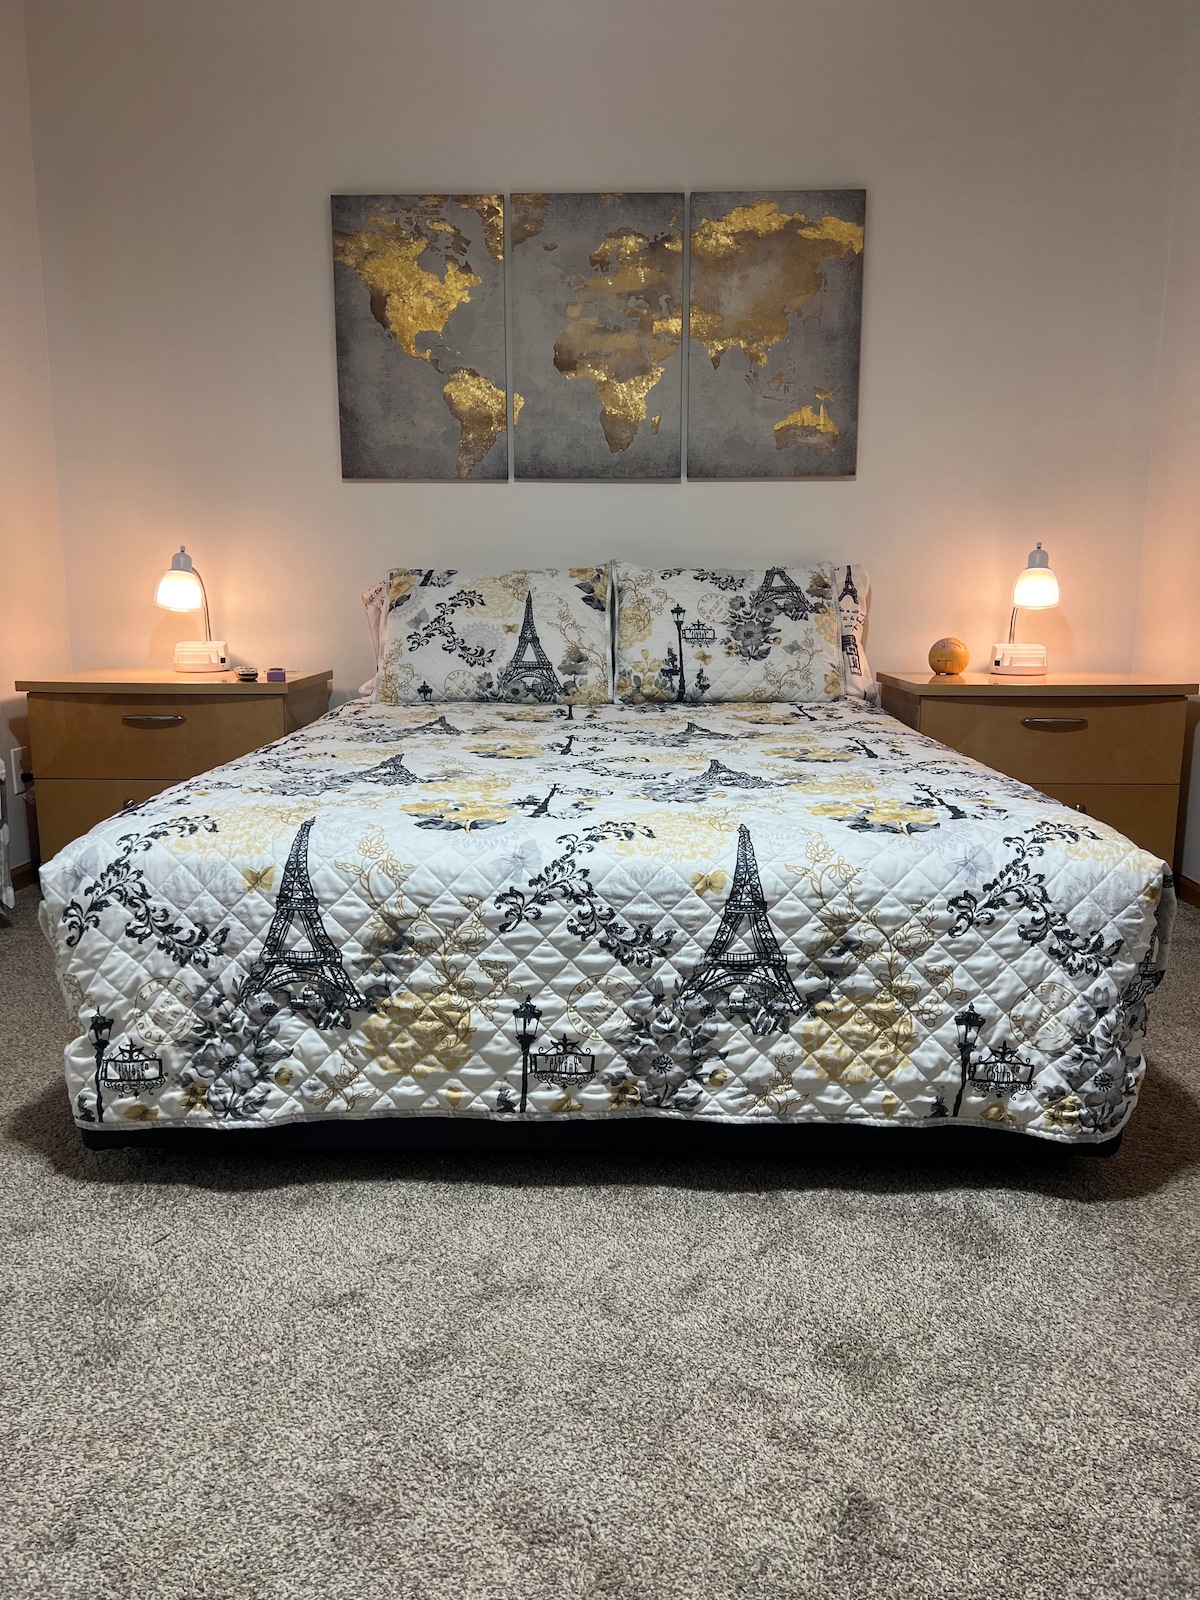 Rockford & Belvidere Comfy bedroom,  10 min from R